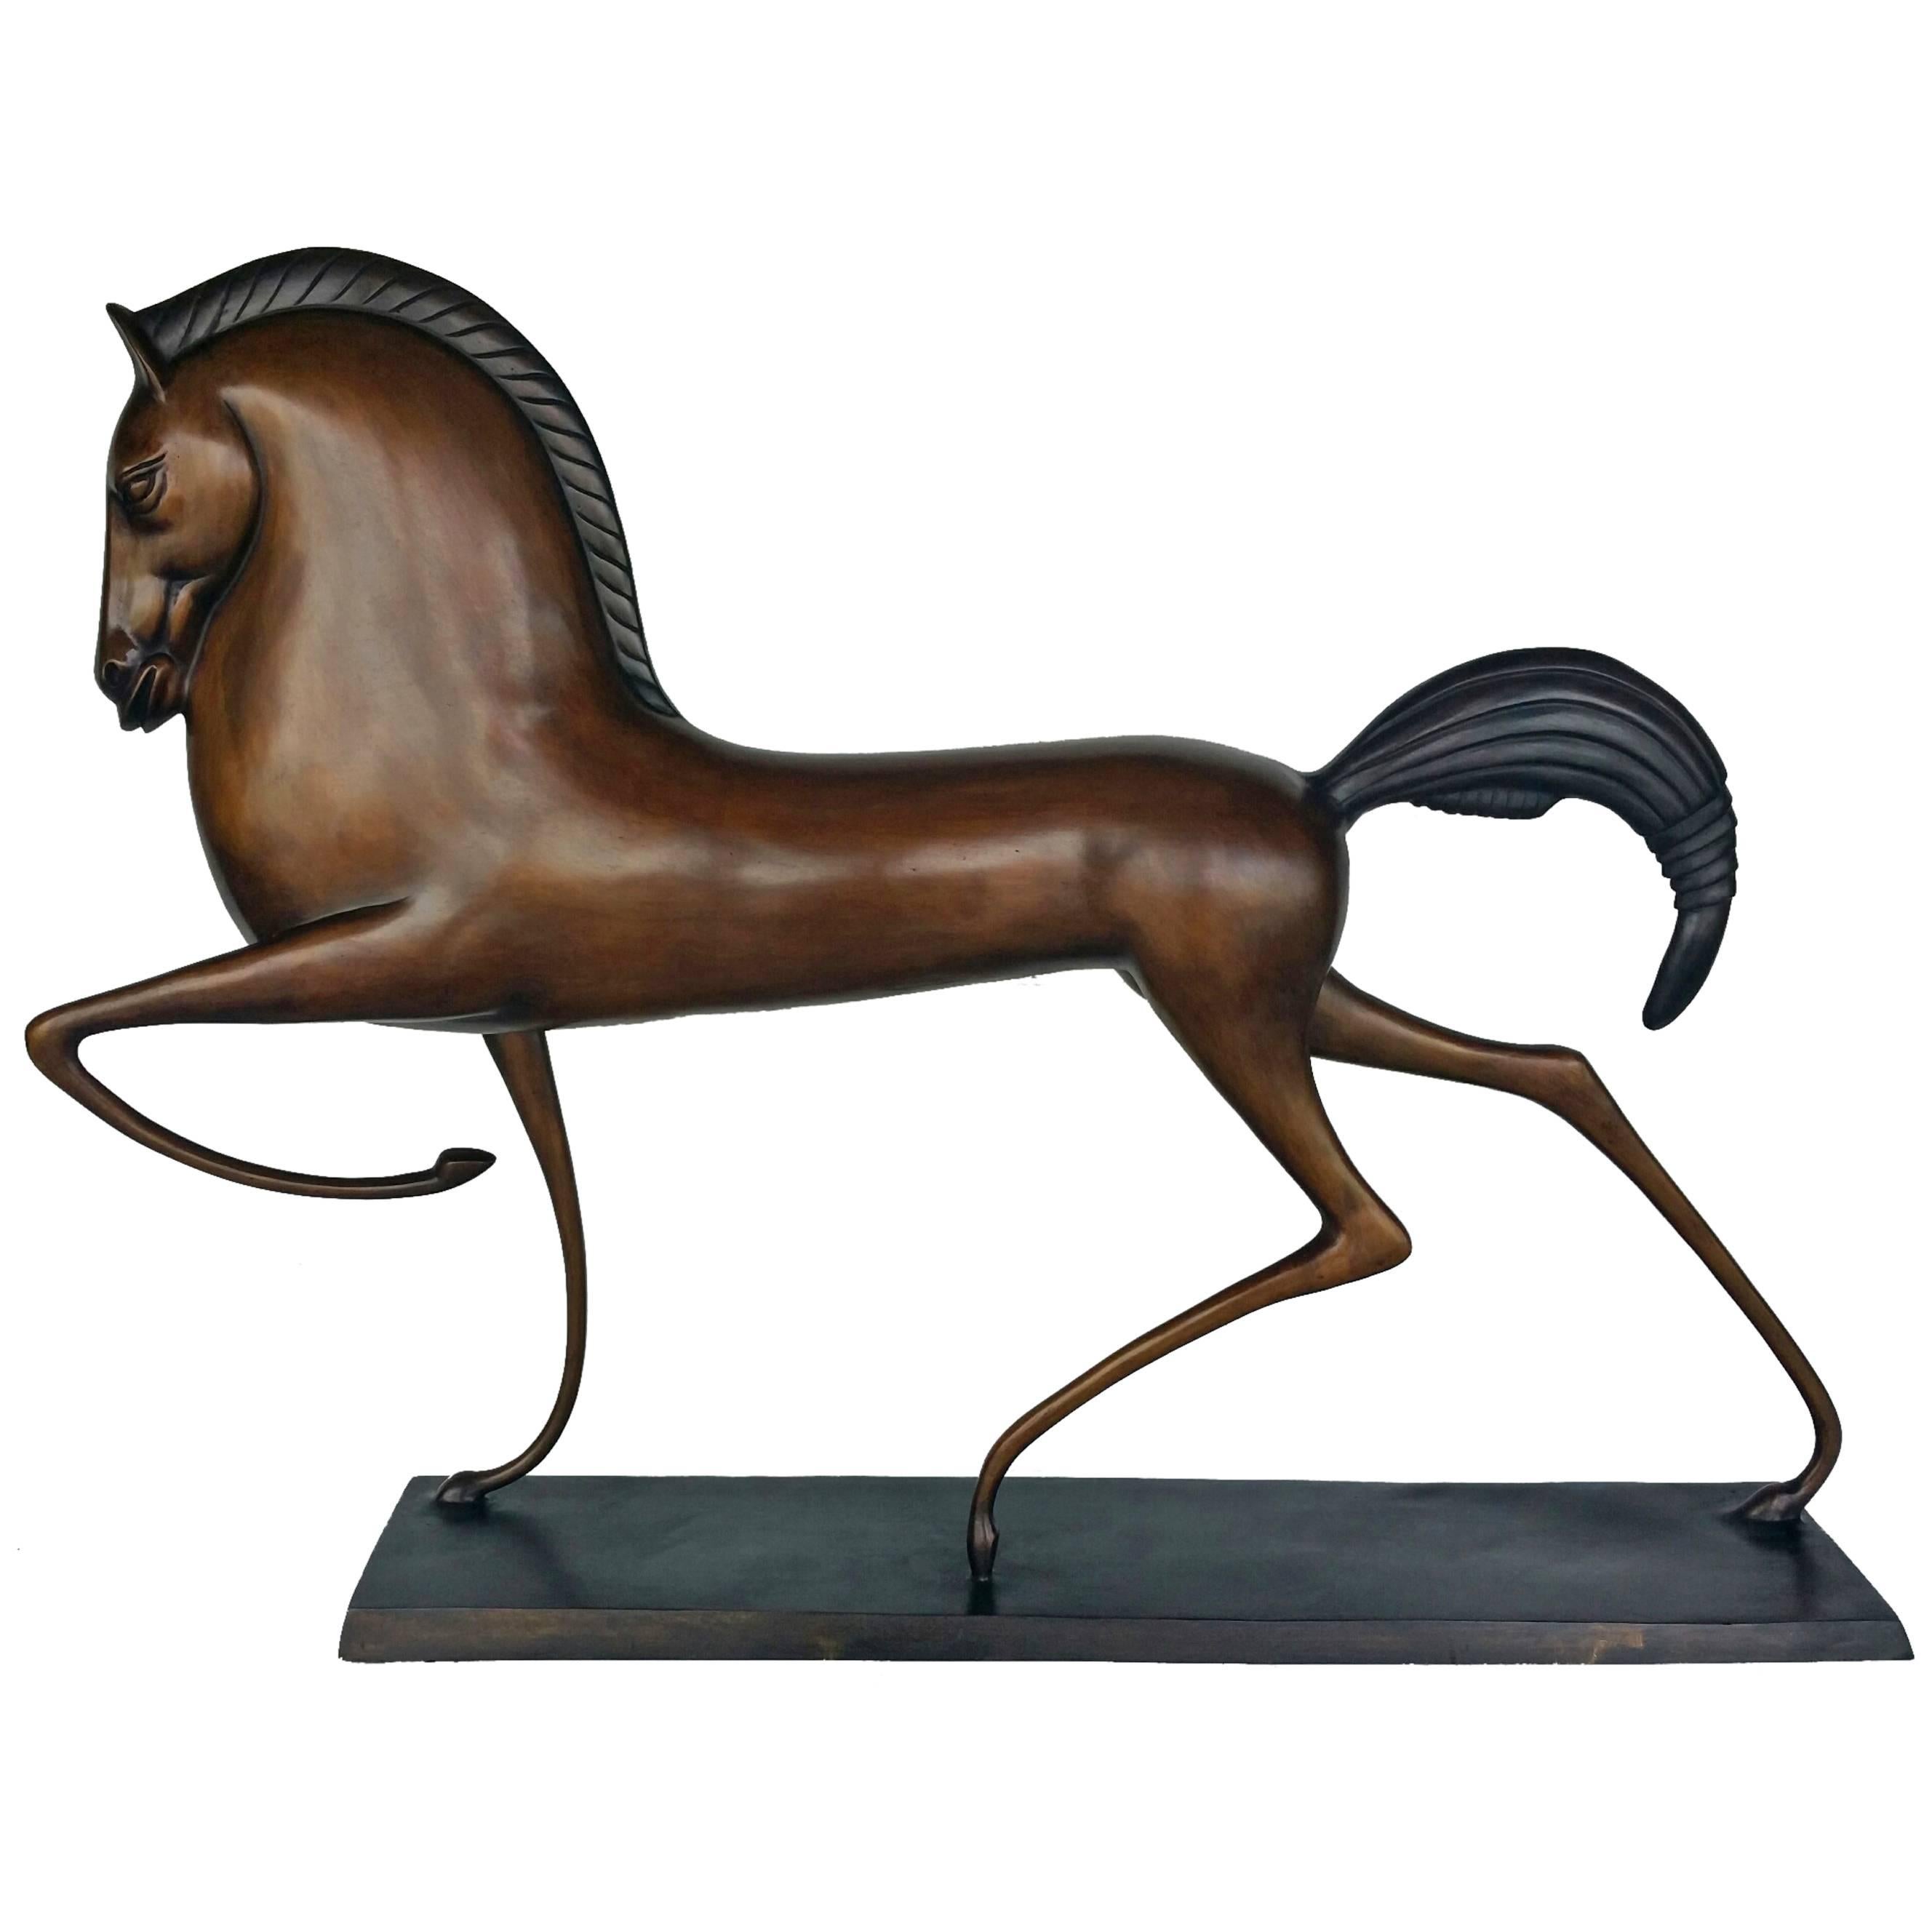  Bronze Etruscan Horse Sculpture in the Manner of Boris Lovet-Borski